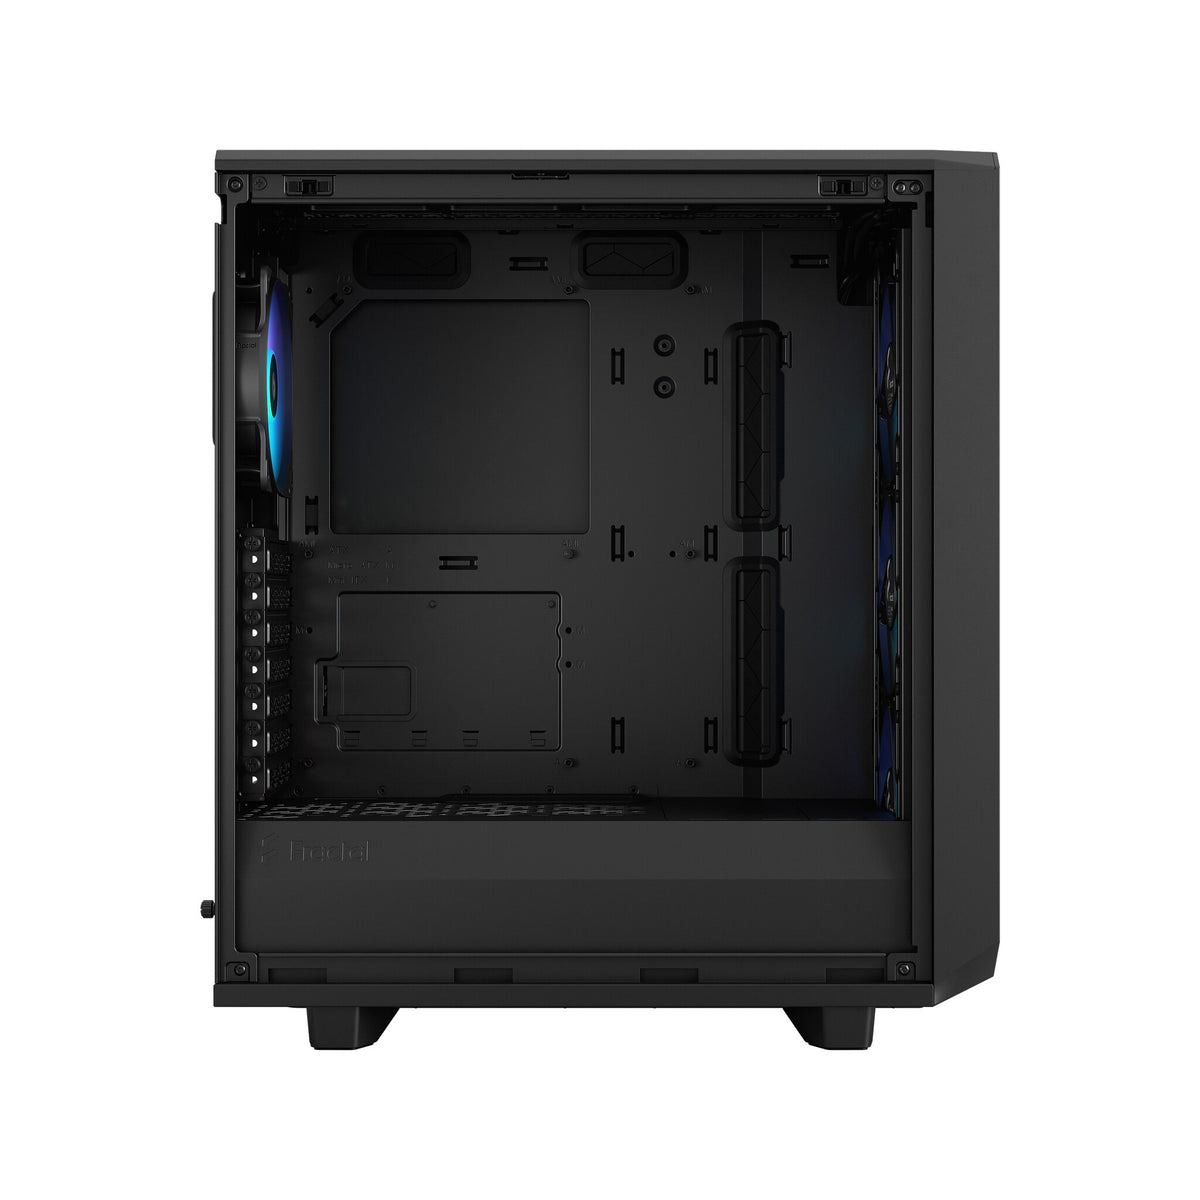 Fractal Design Meshify 2 Compact RGB in Black